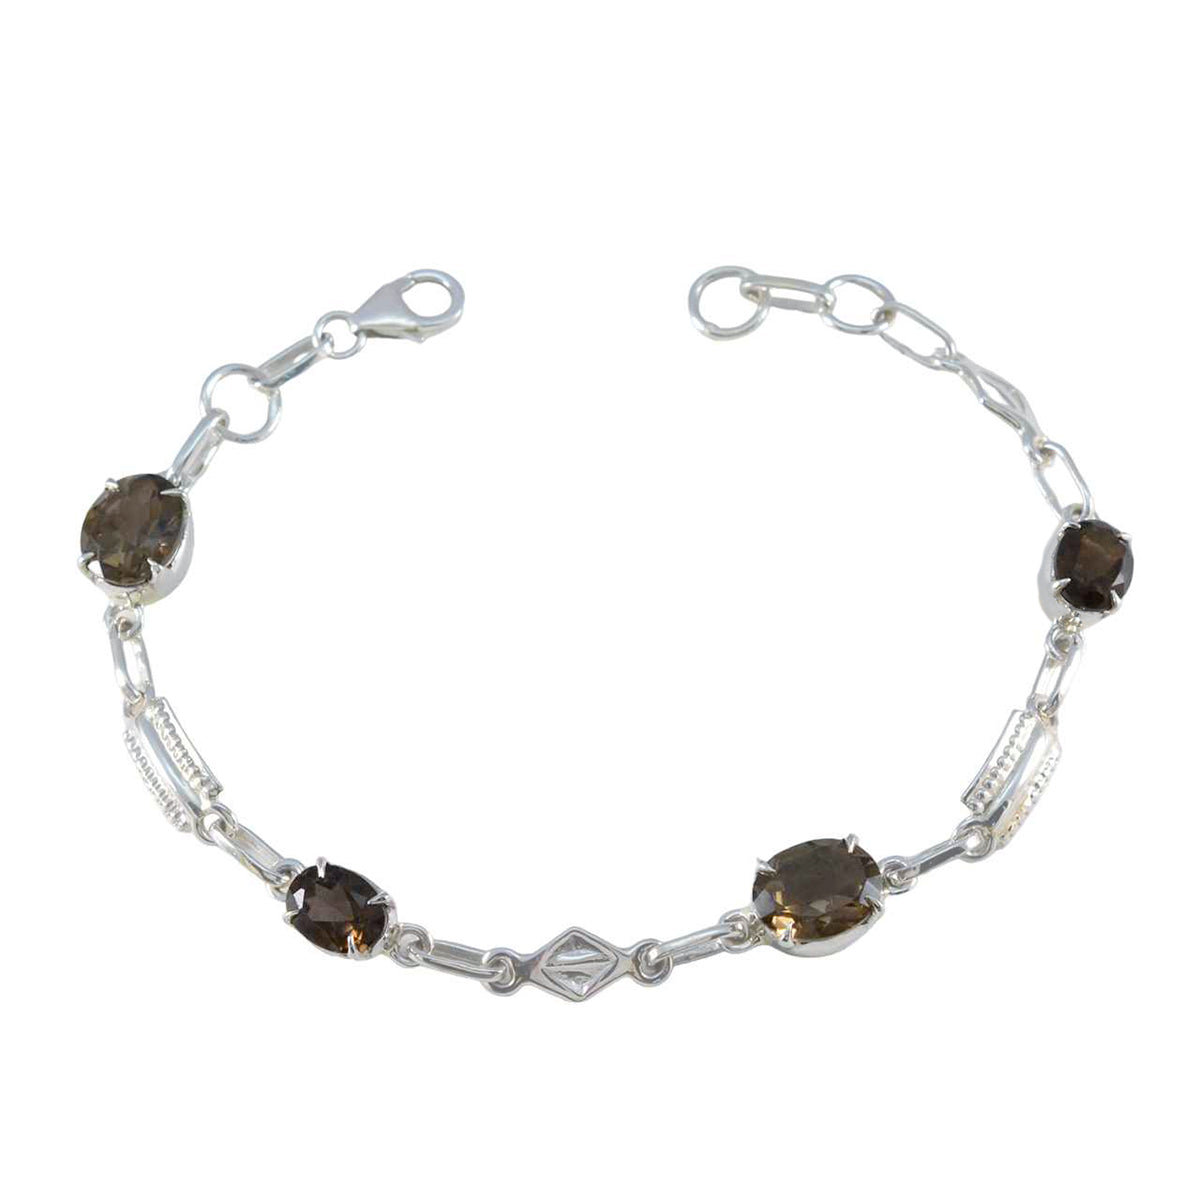 Riyo Desirable 925 Sterling Silver Bracelet For Girl Smoky Quartz Bracelet Prong Setting Bracelet with Fish Hook Link Bracelet L Size 6-8.5 Inch.